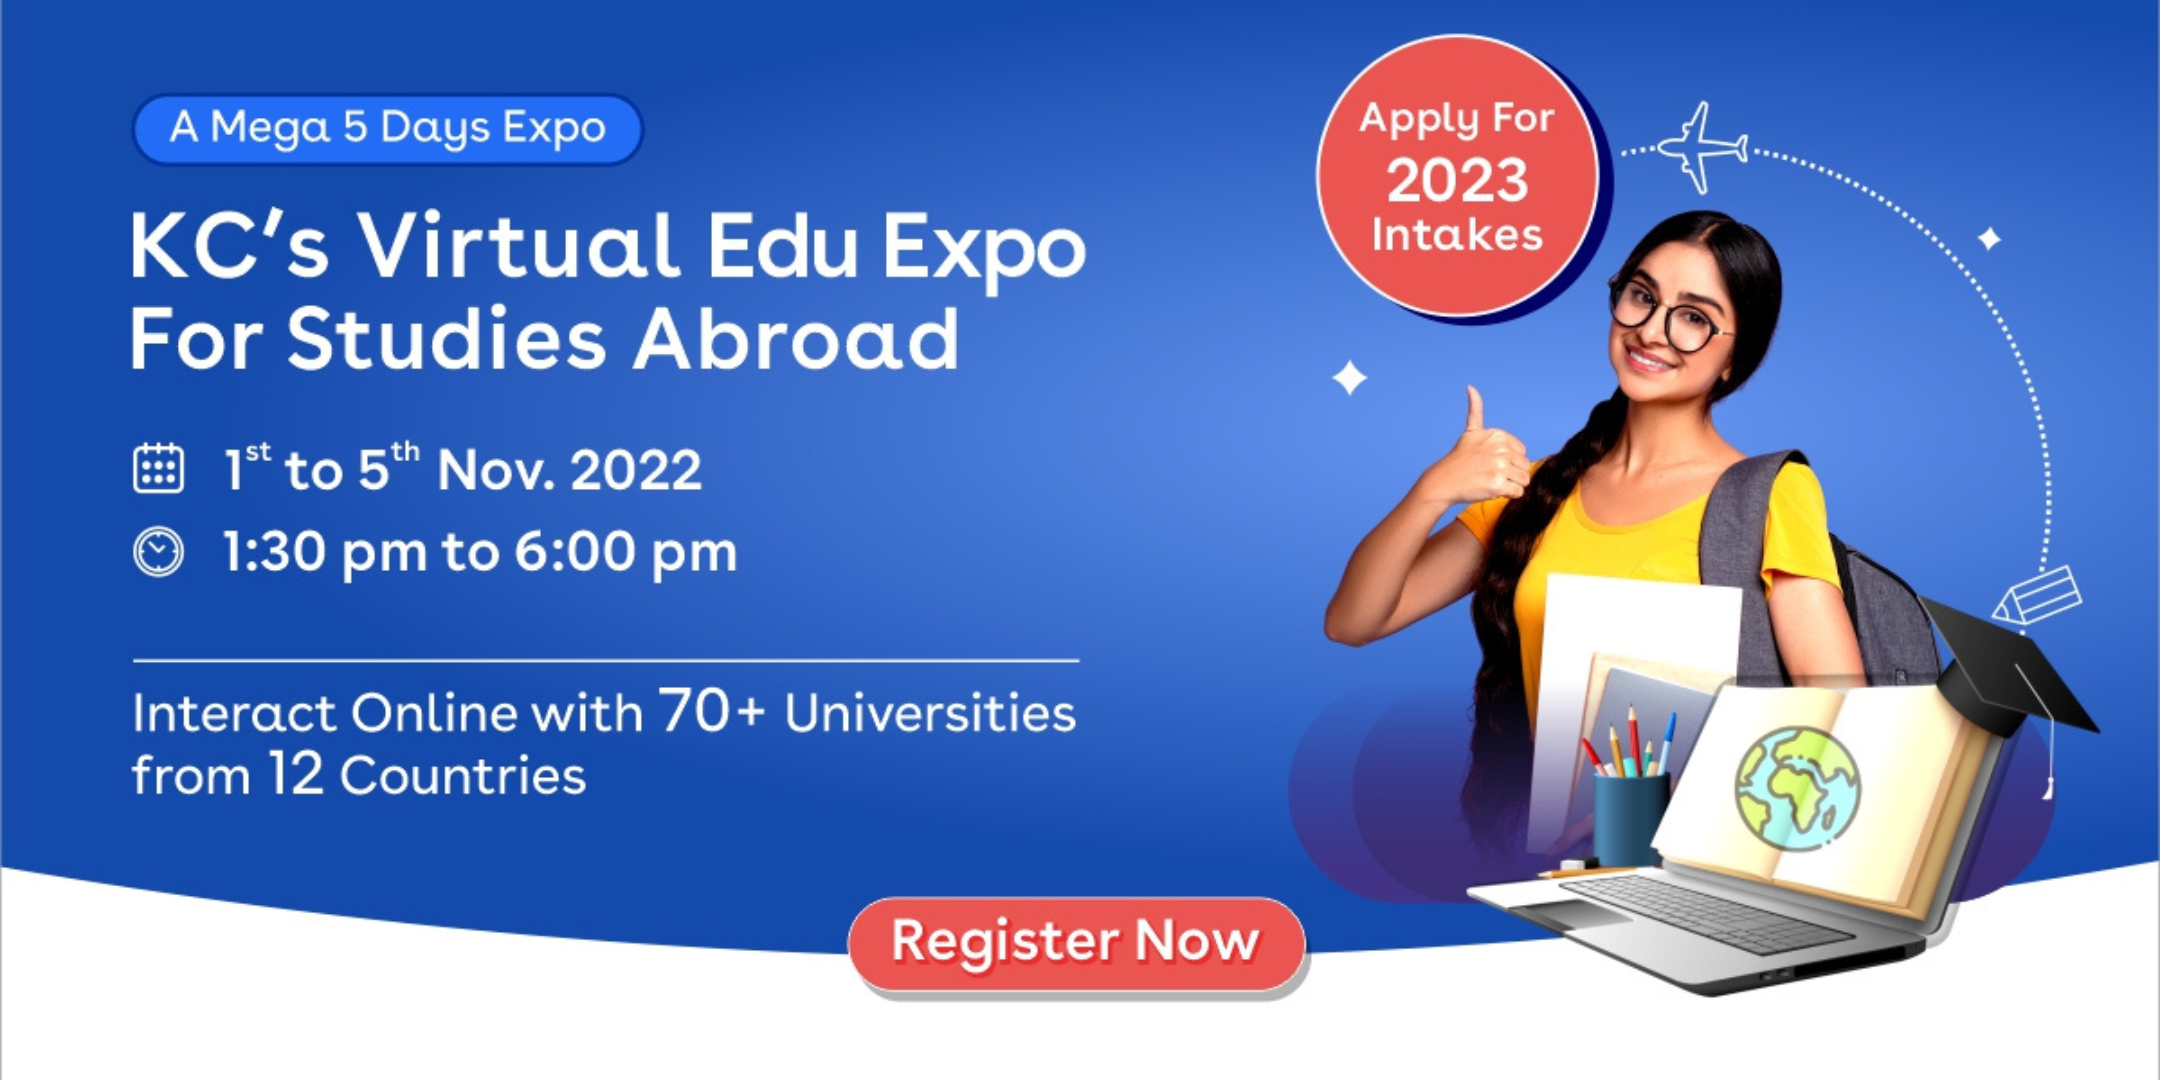 KC’s Virtual Edu Expo for Studies Abroad, Online Event